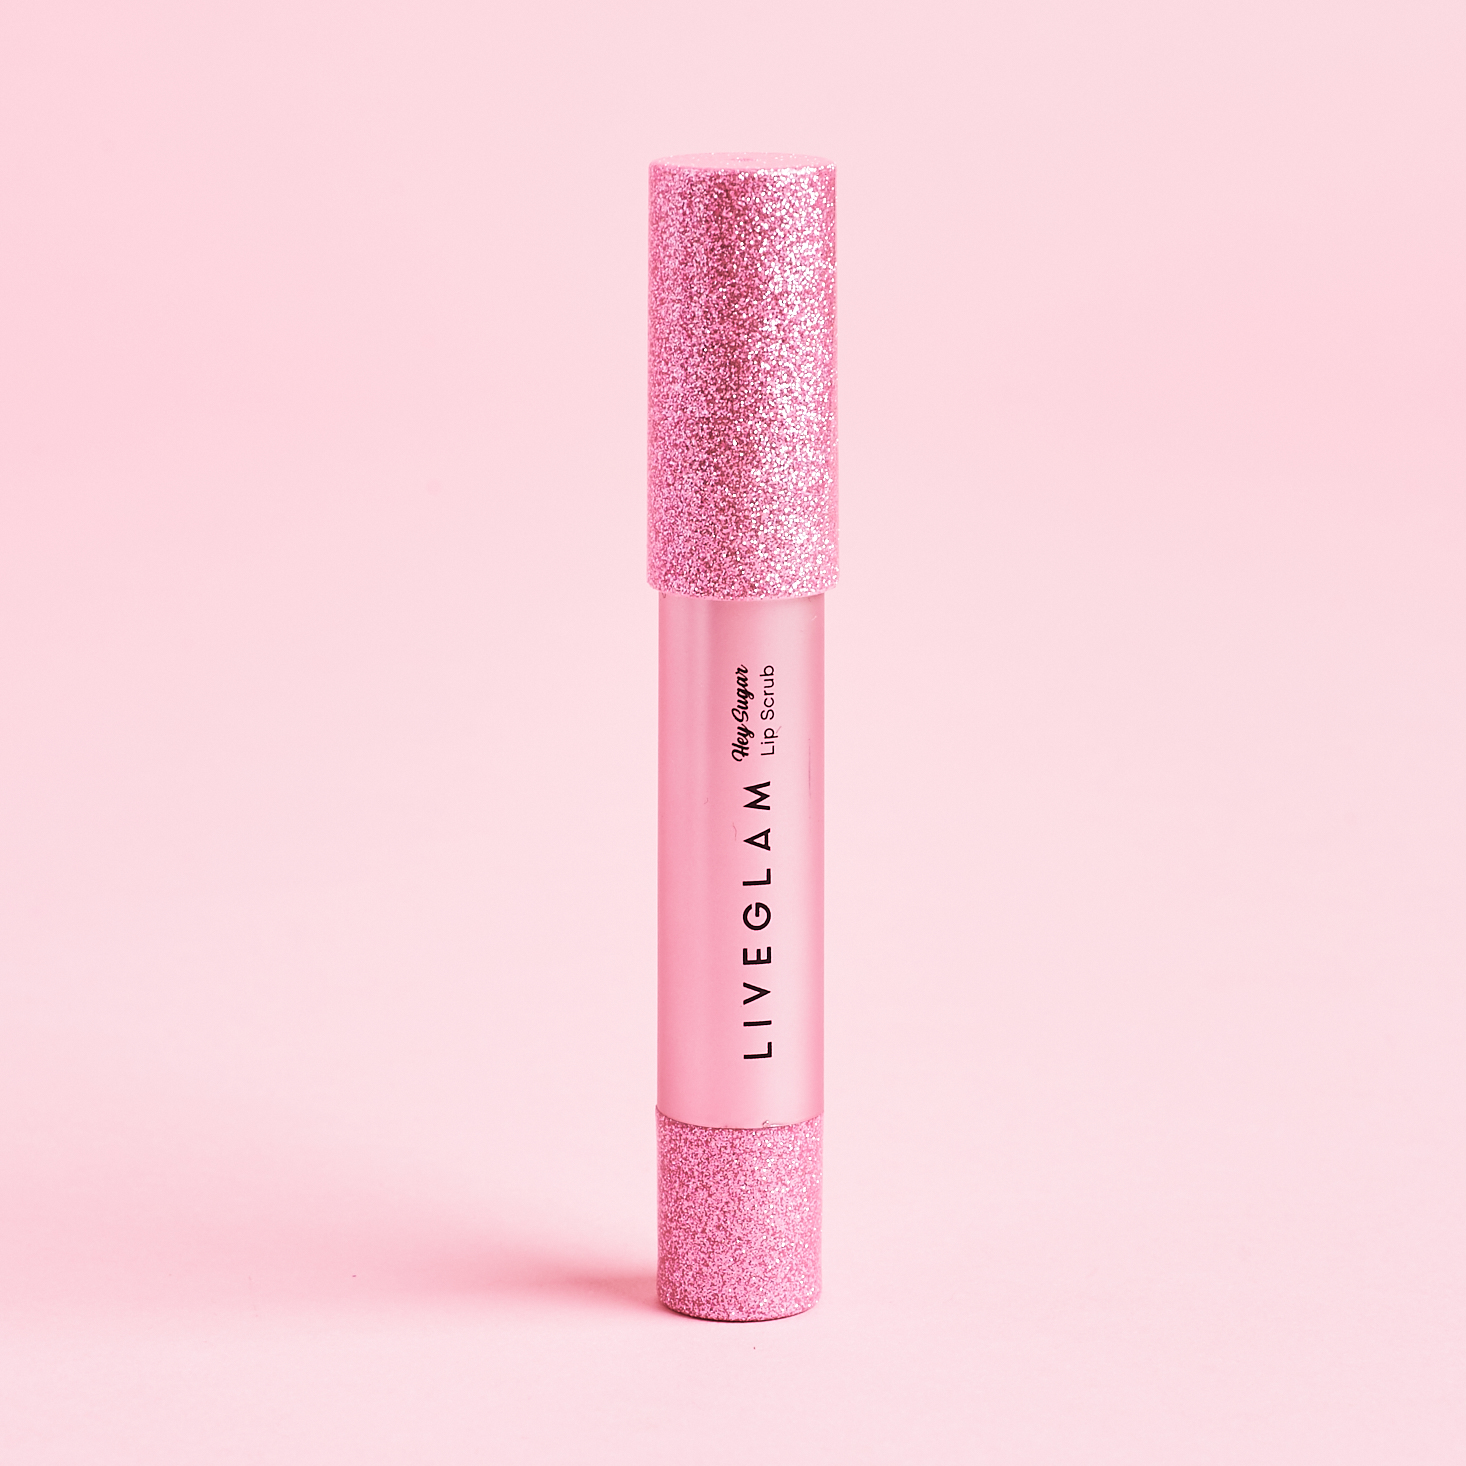 pink and glitter covered tube of lip scrub